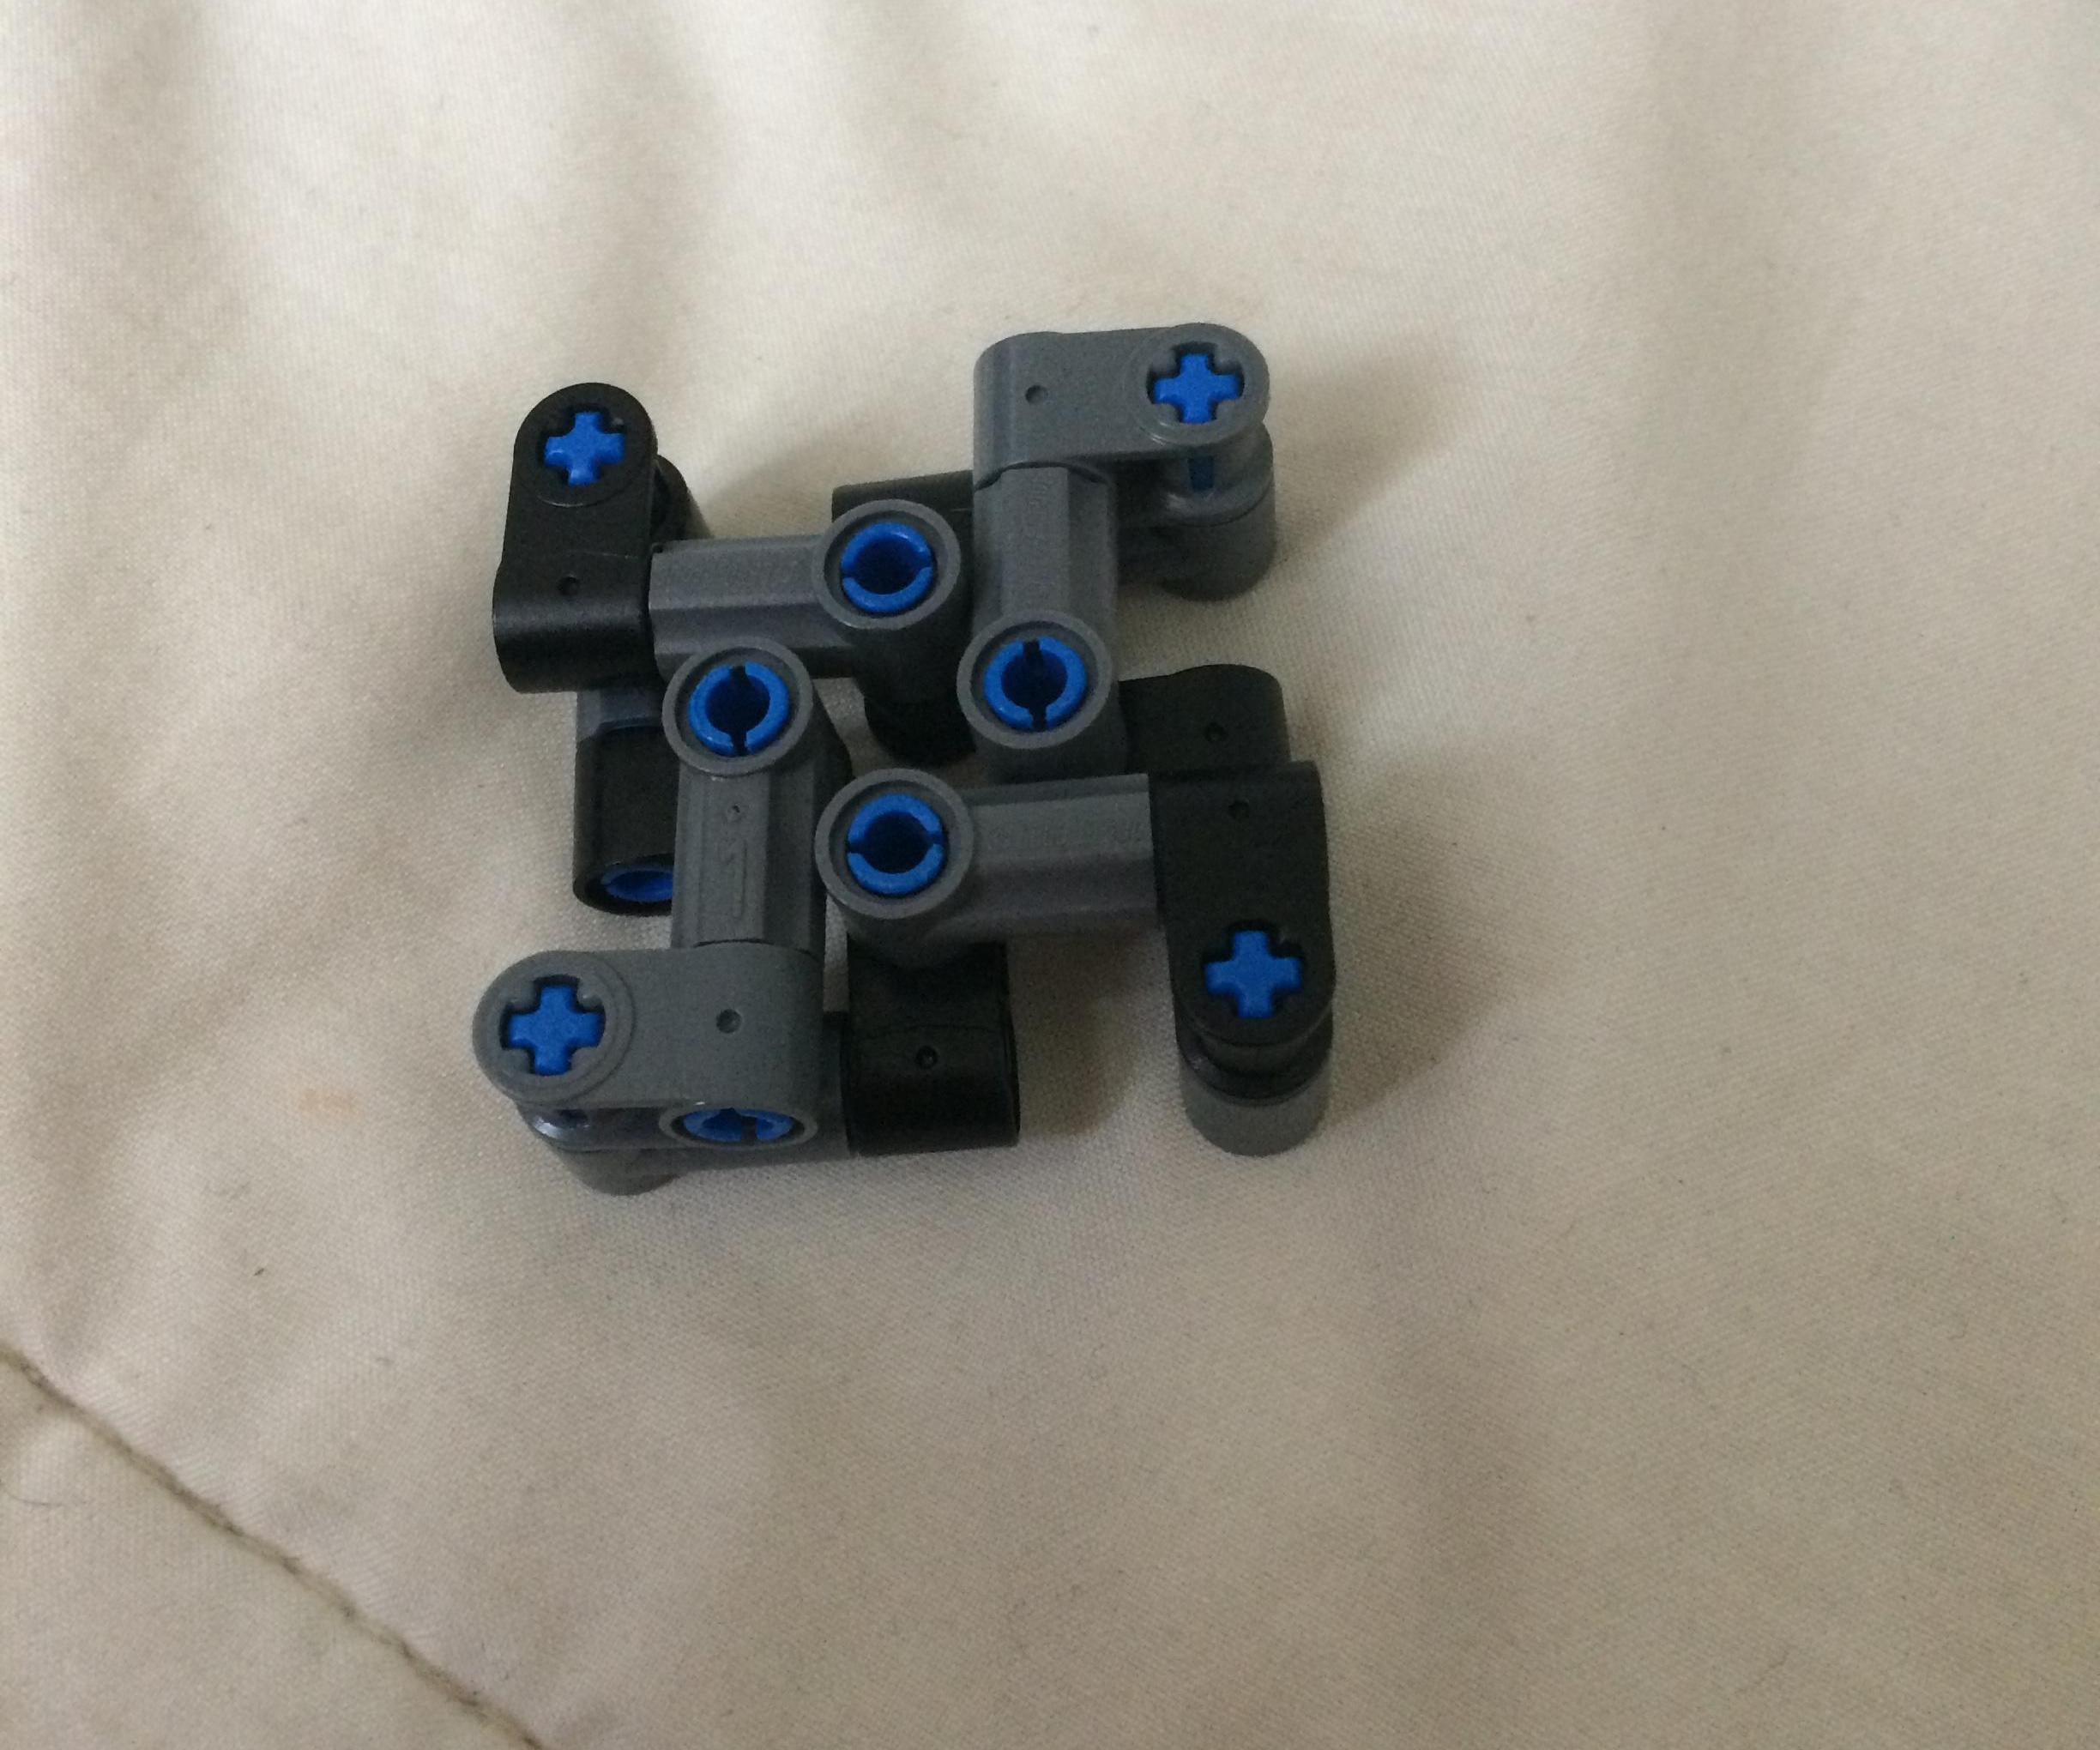 Lego Puzzle/fidget Toy